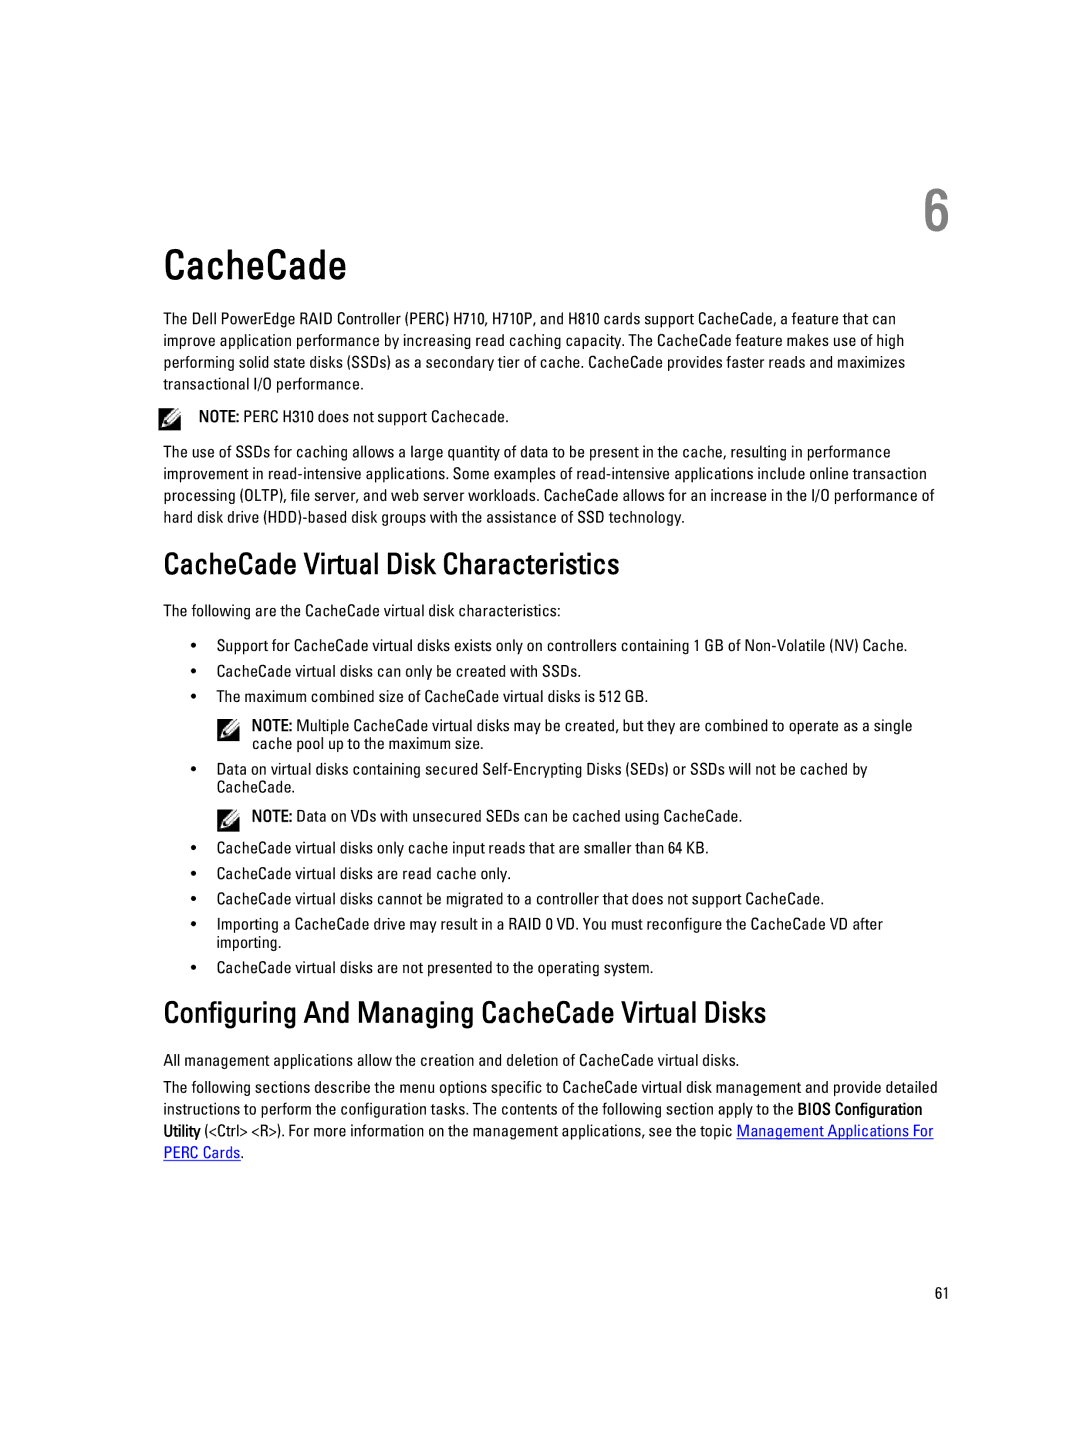 Dell H310, H710P, H810 manual CacheCade Virtual Disk Characteristics, Configuring And Managing CacheCade Virtual Disks 